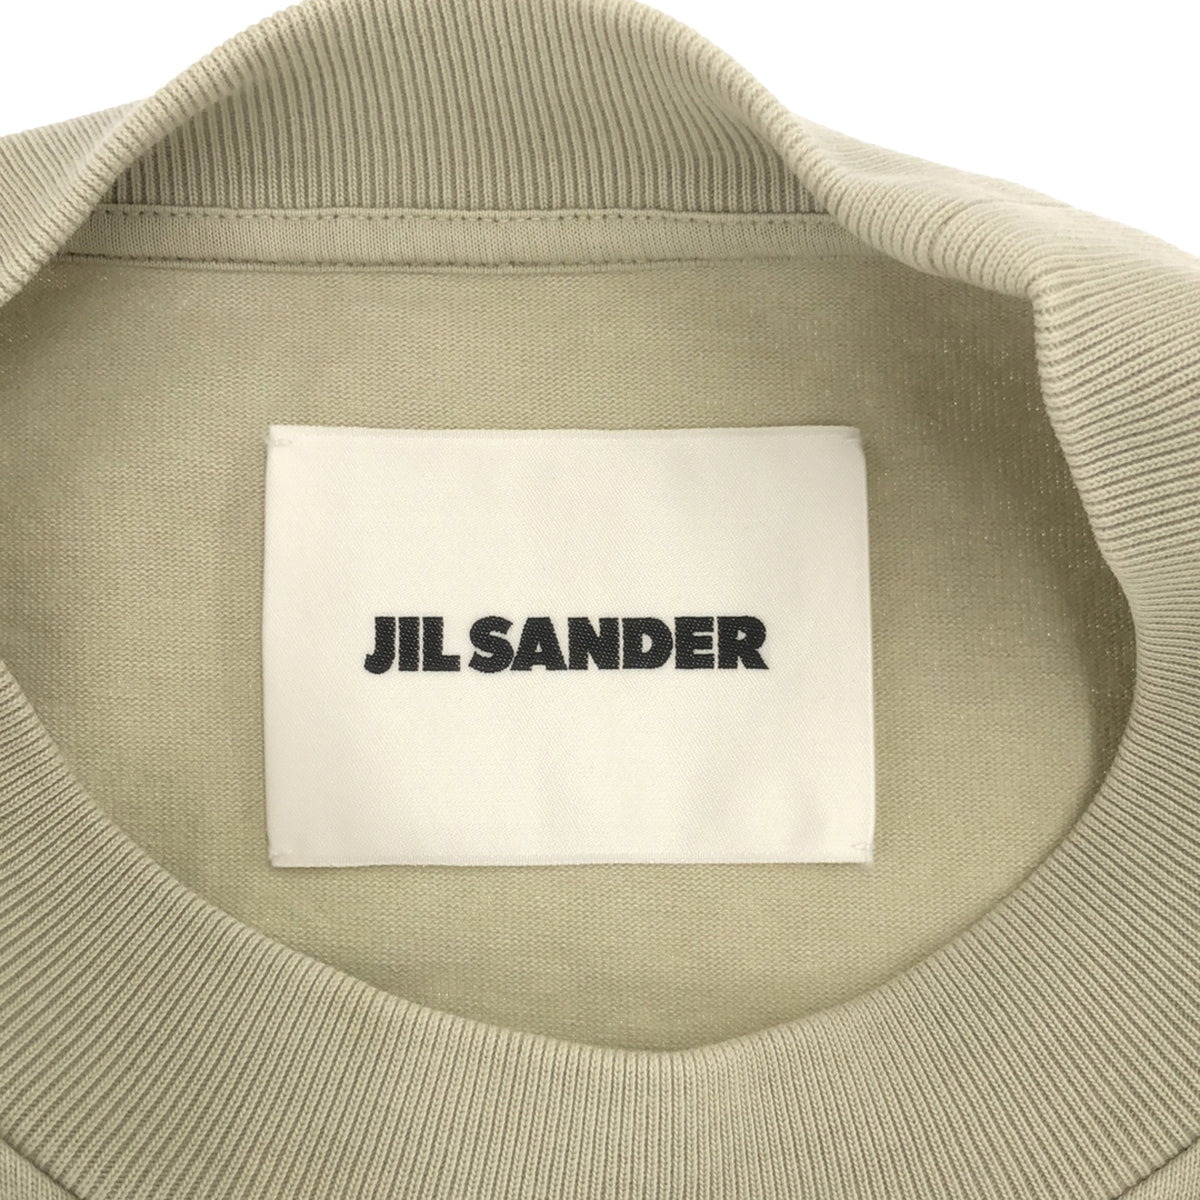 JIL SANDER / ジルサンダー | メタルピン オーバー スウェット プルオーバー | S | メンズ